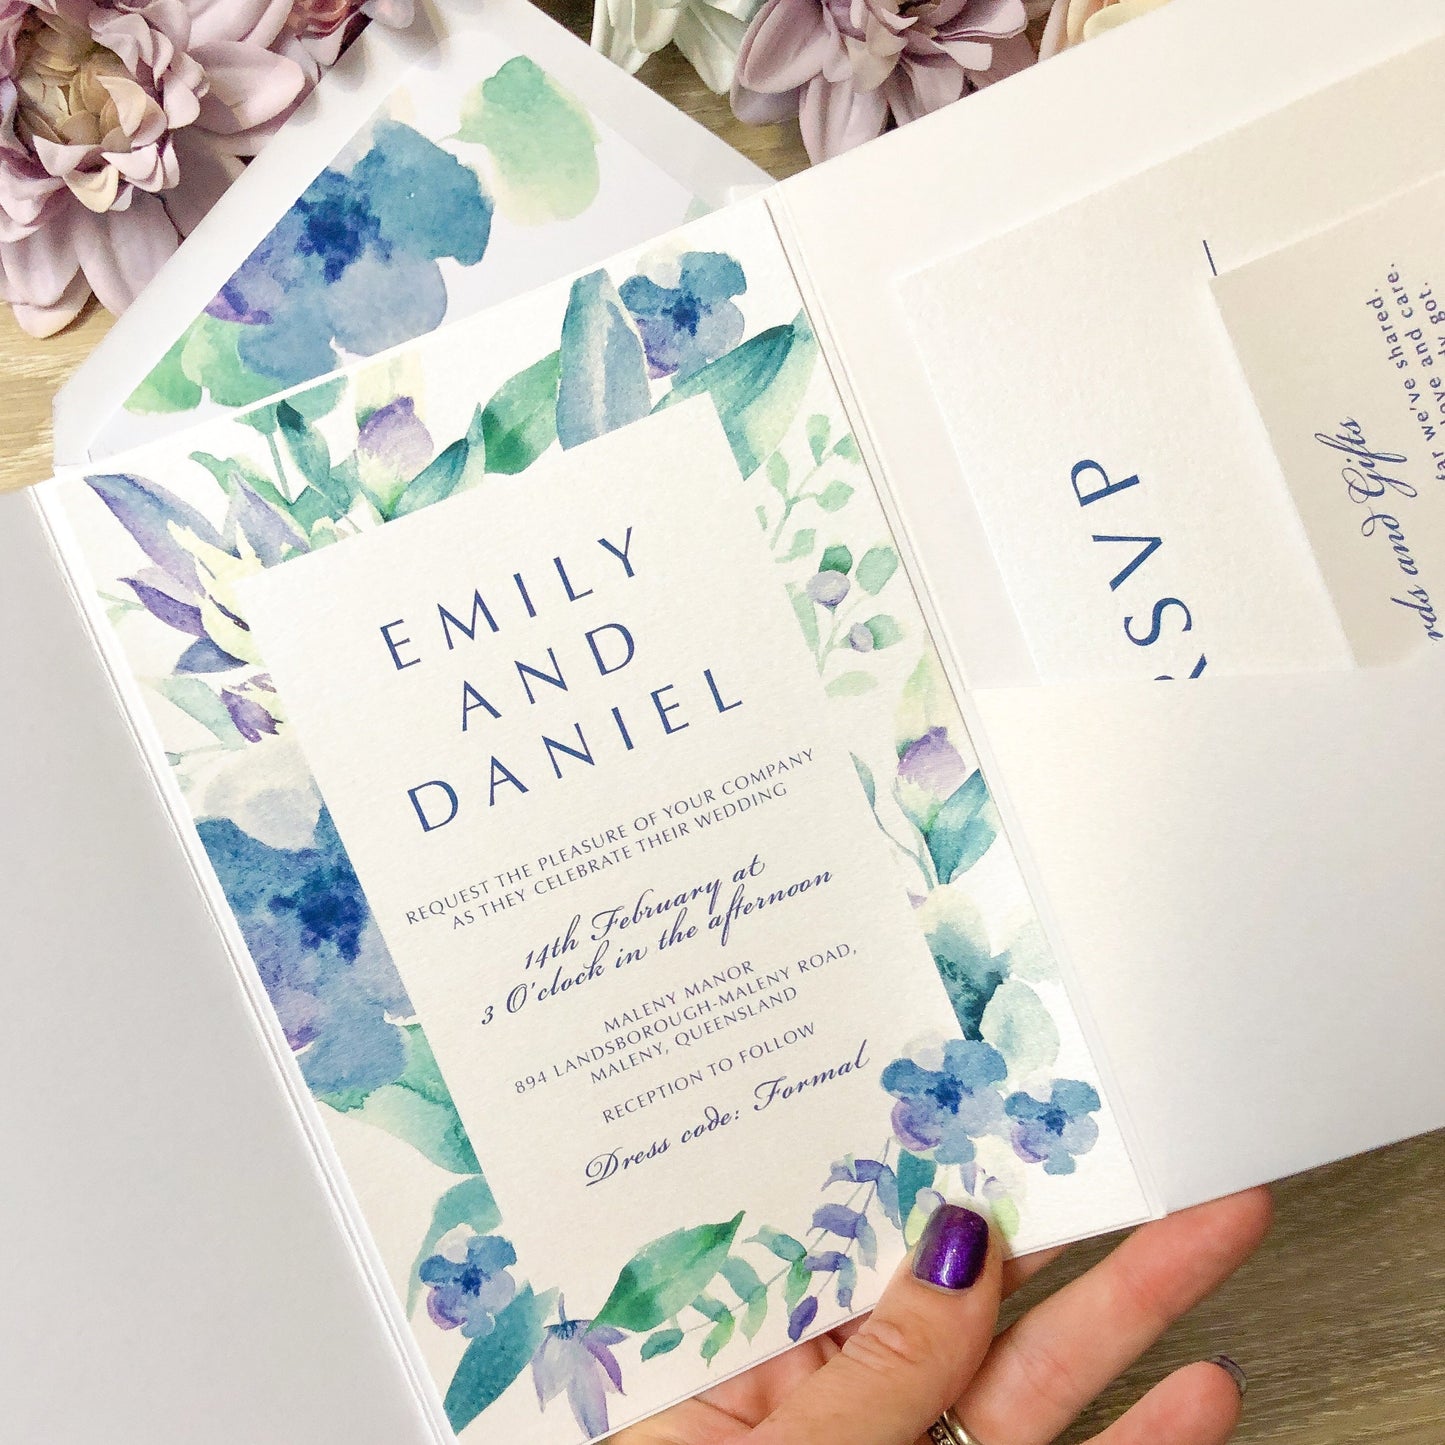 Emily Pocket Invitation Suite - Glitzy Prints